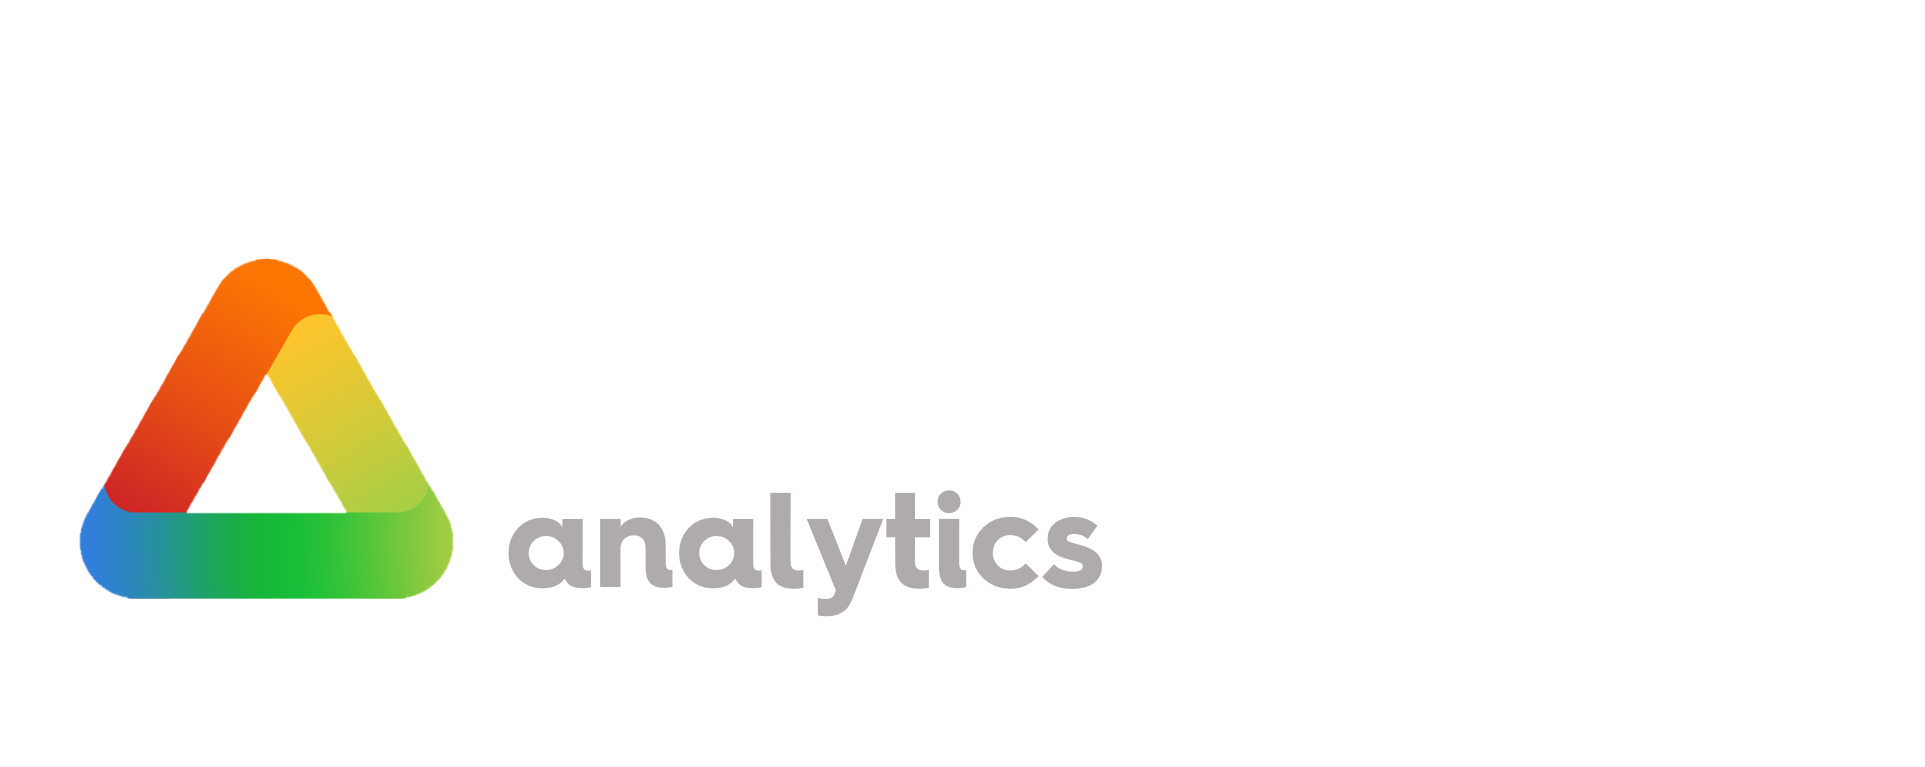 Arfago Analytics